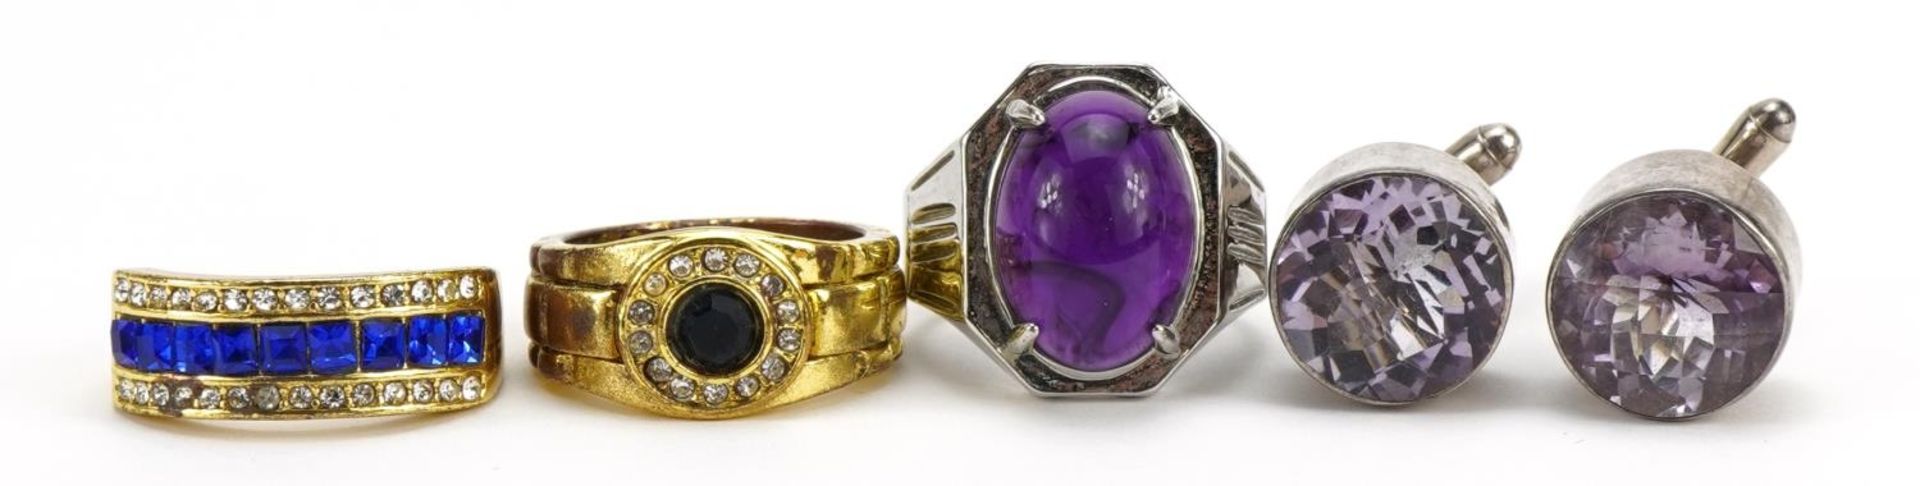 Pair of silver purple stone cufflinks and three dress rings